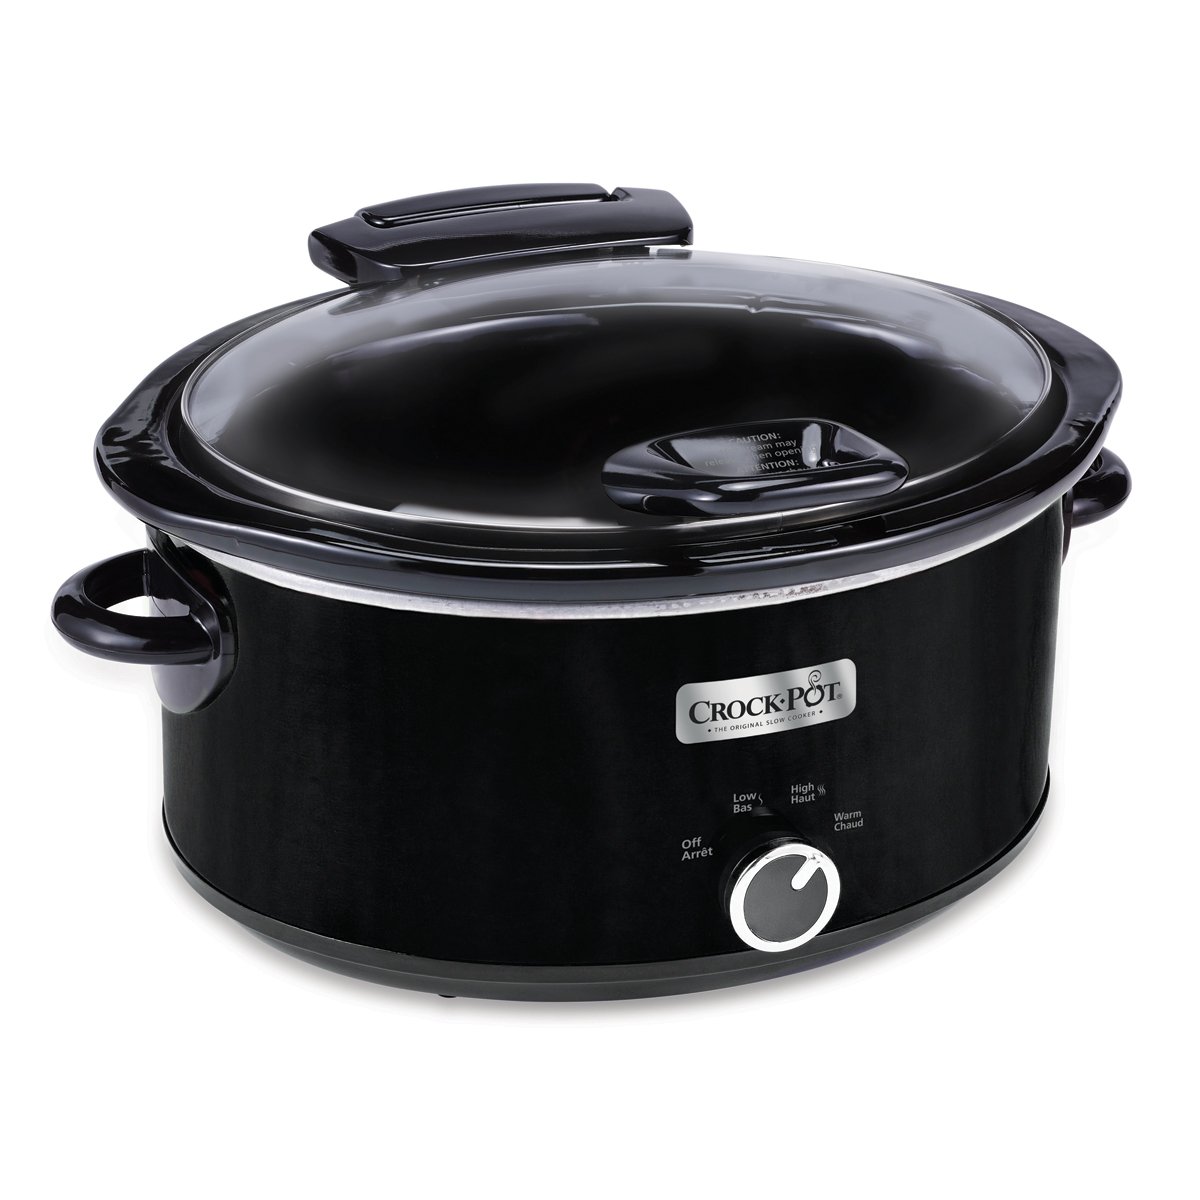 Crock Pot 6qt Oval Manual Slow Cooker With Hinged Lid Black Ice Sccpvm600hbi 033 Crock Pot Canada